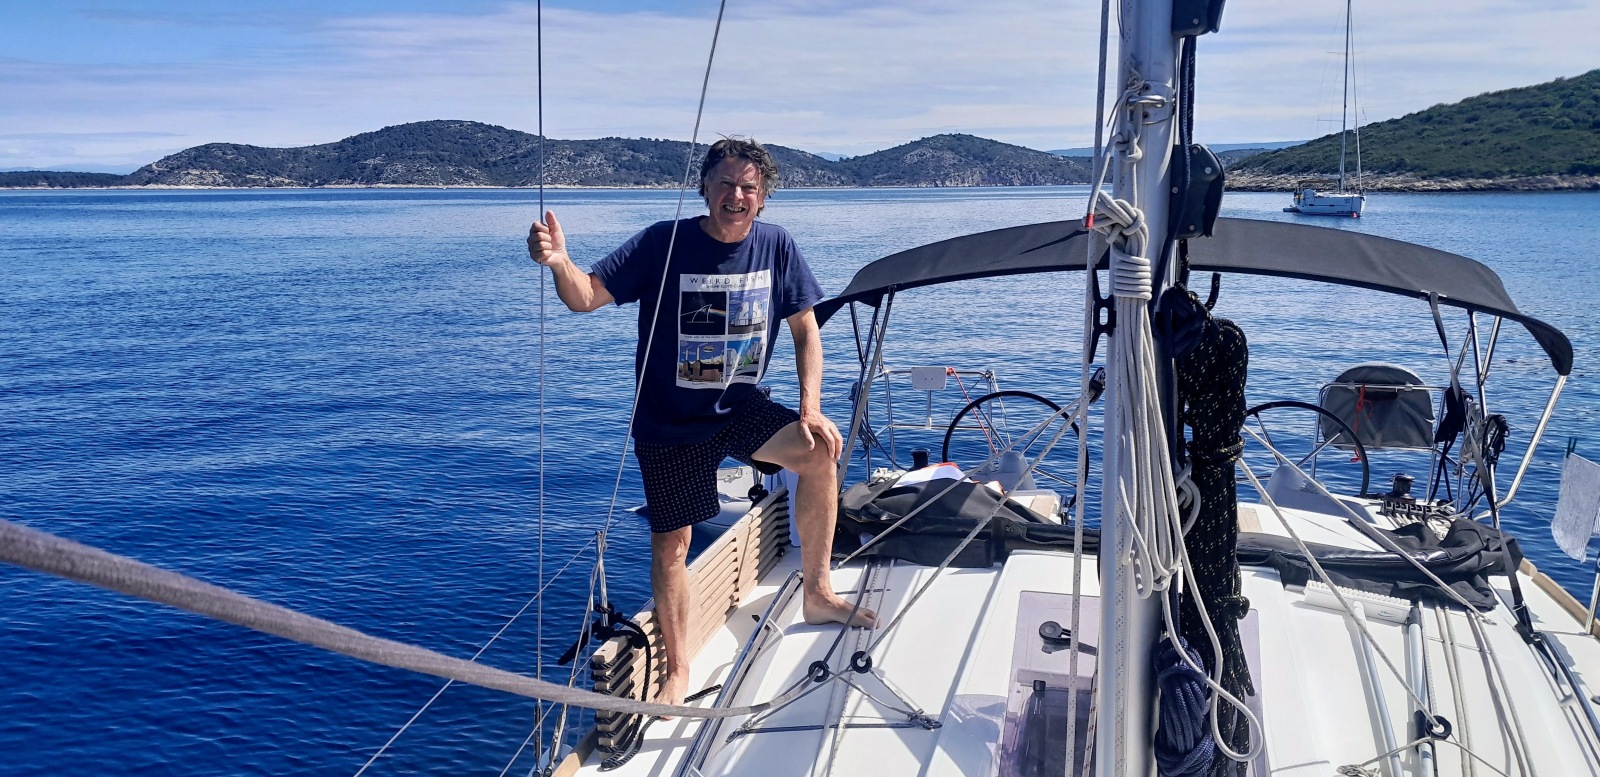 Geoff on yacht Manilo at Klava, Pakleni Islands in Croatia